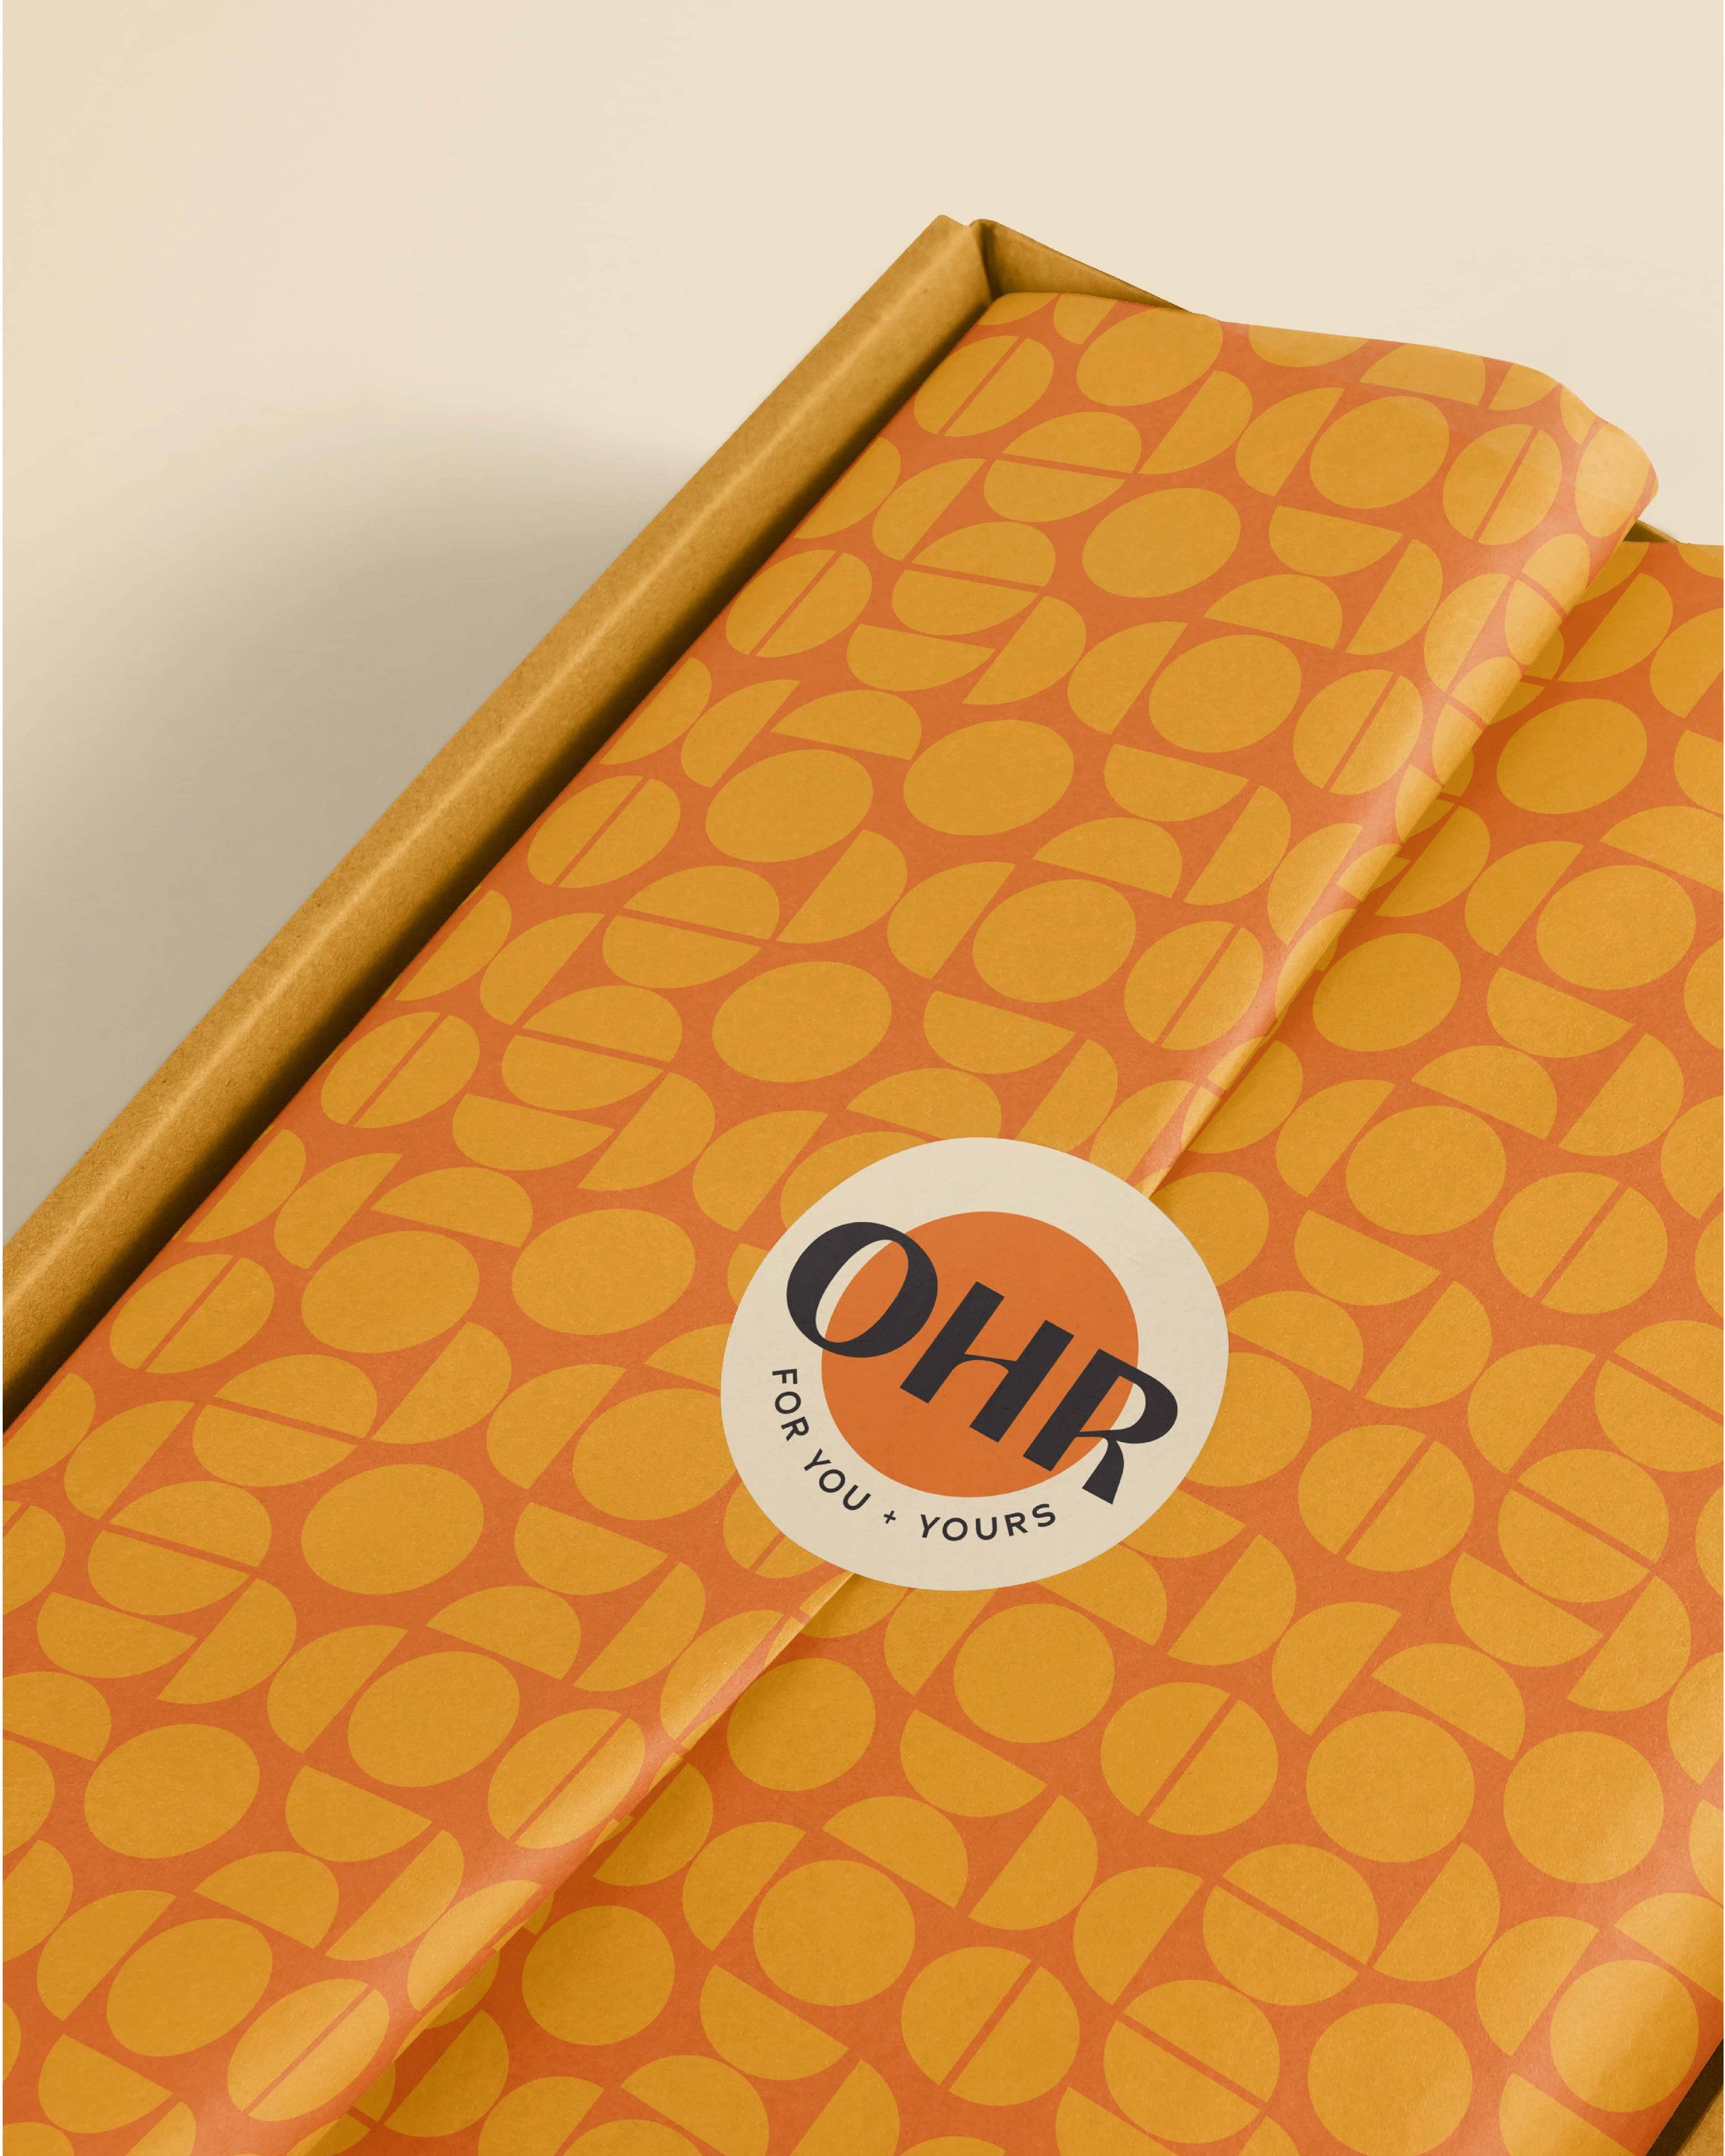 OHR-beauty logo and packaging design-9.jpg